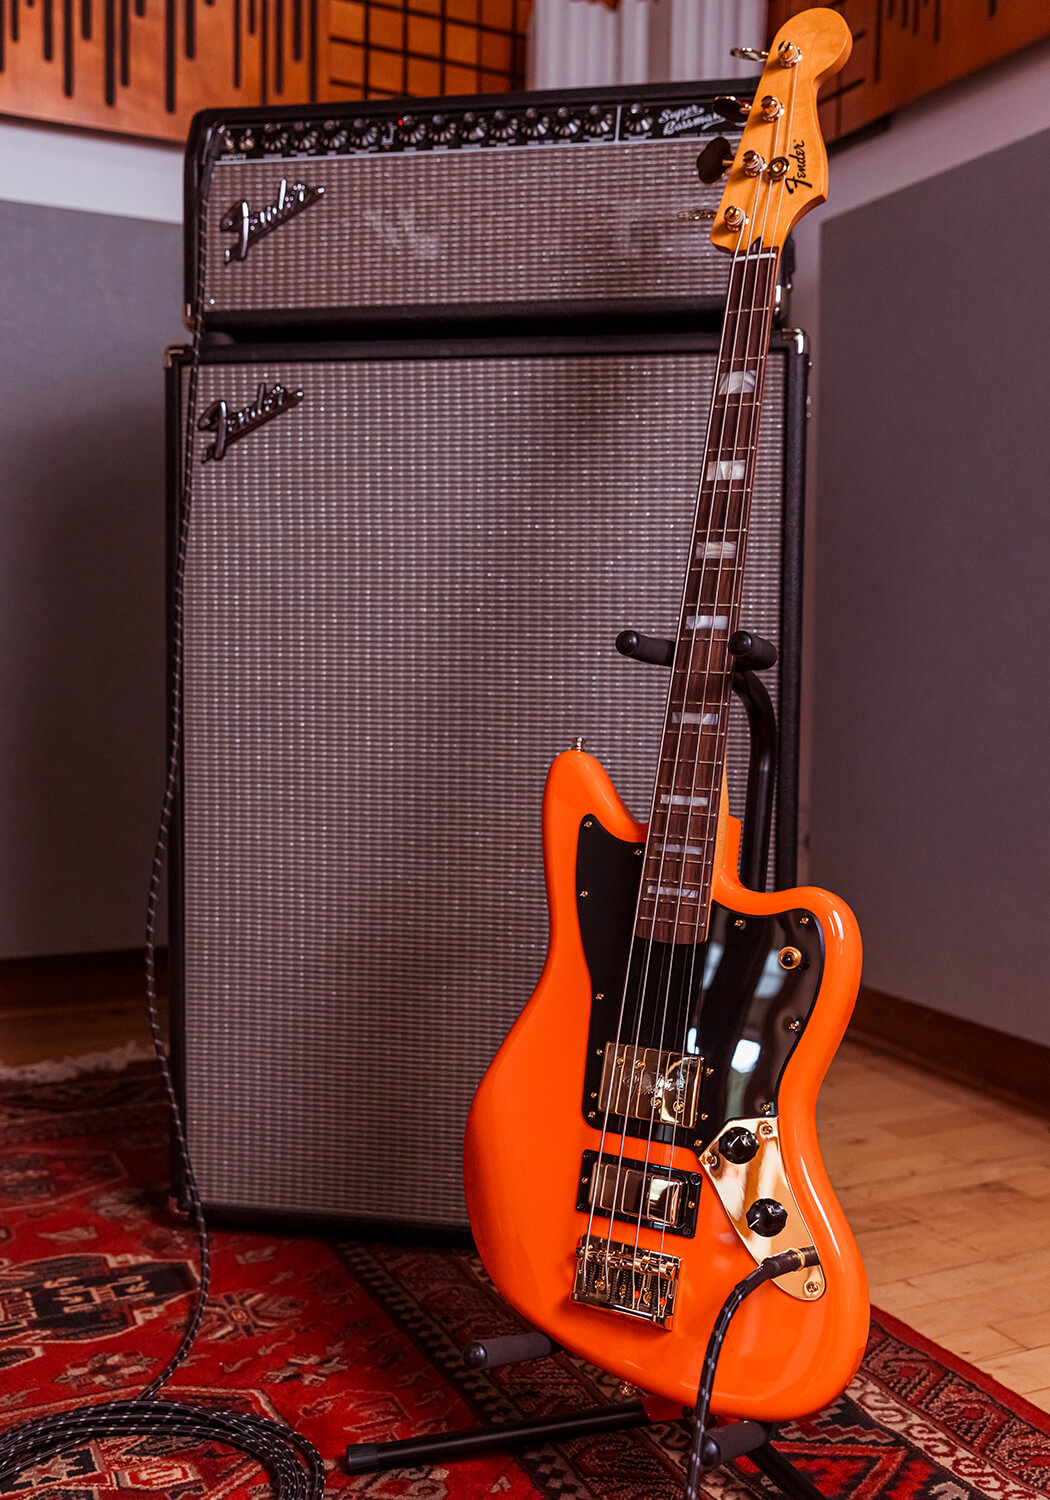 Mike Kerr’s signature Fender Jaguar bass